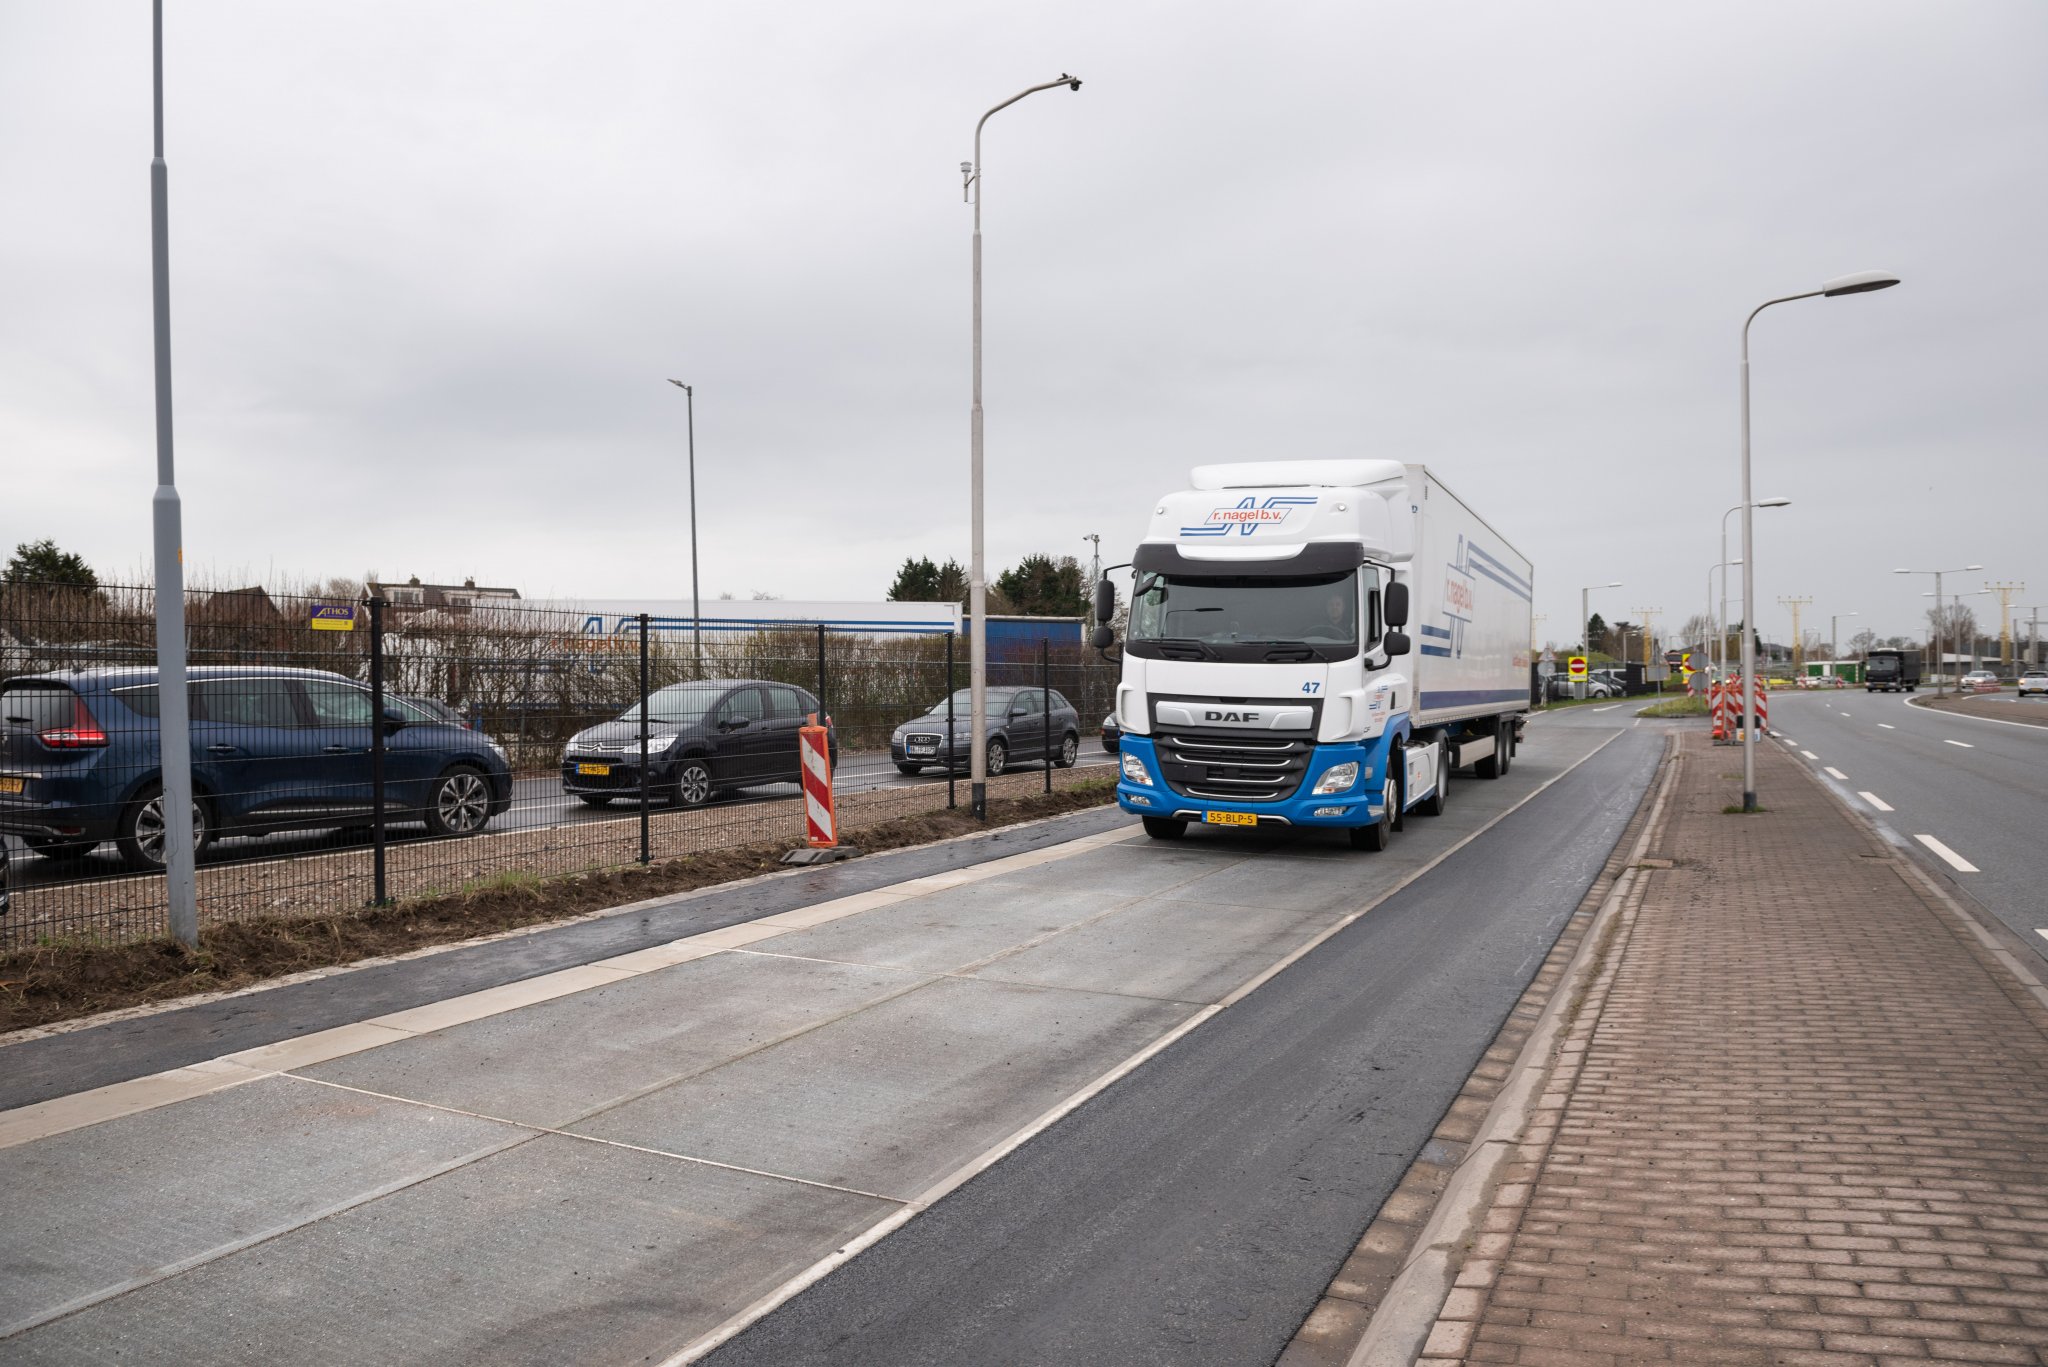 Solar powered parallel road for heavy traffic in Haarlemmermeer, NL